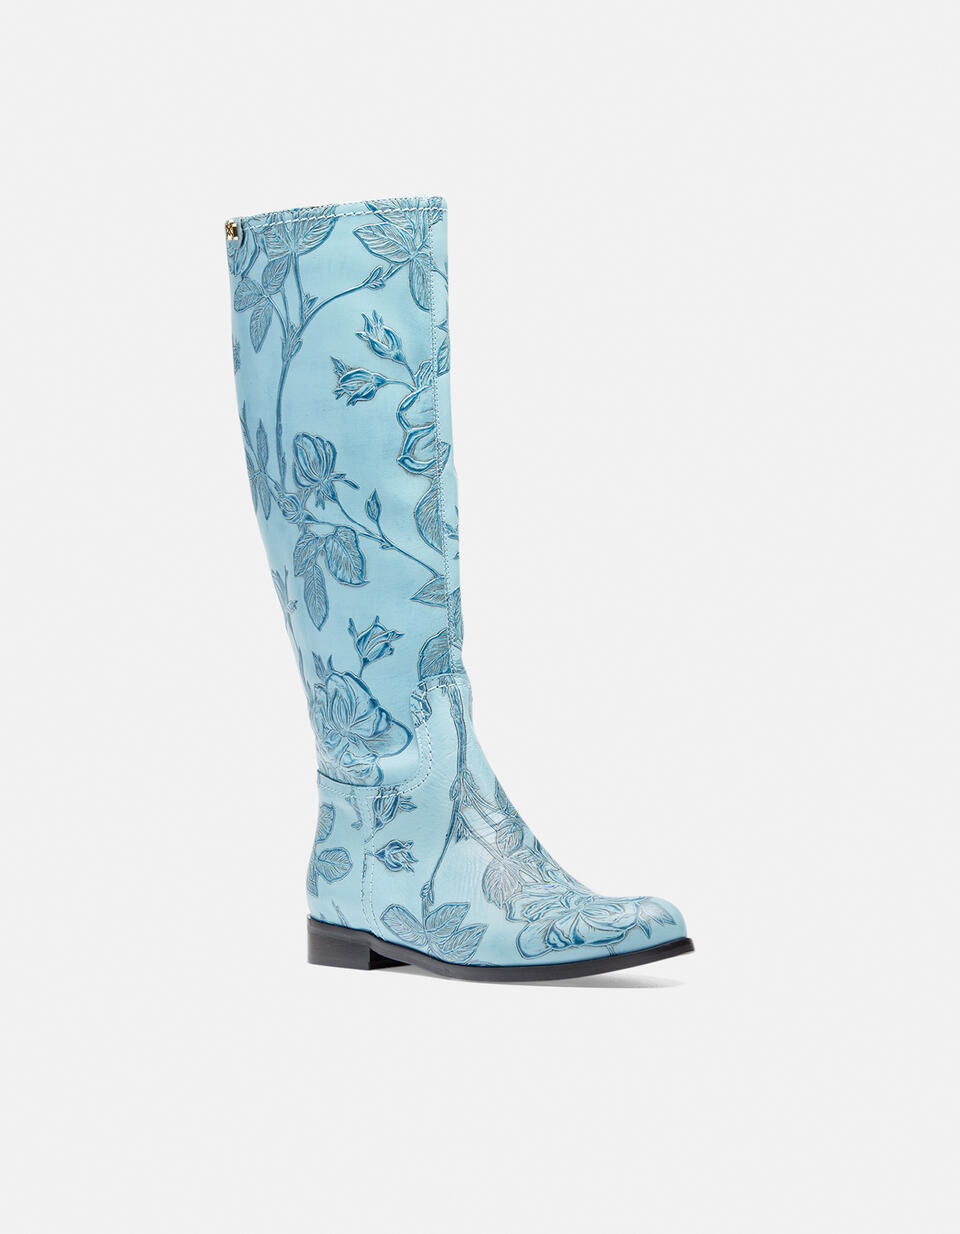 Mimì boot Light blue  - Woman Shoes - Shoes - Cuoieria Fiorentina